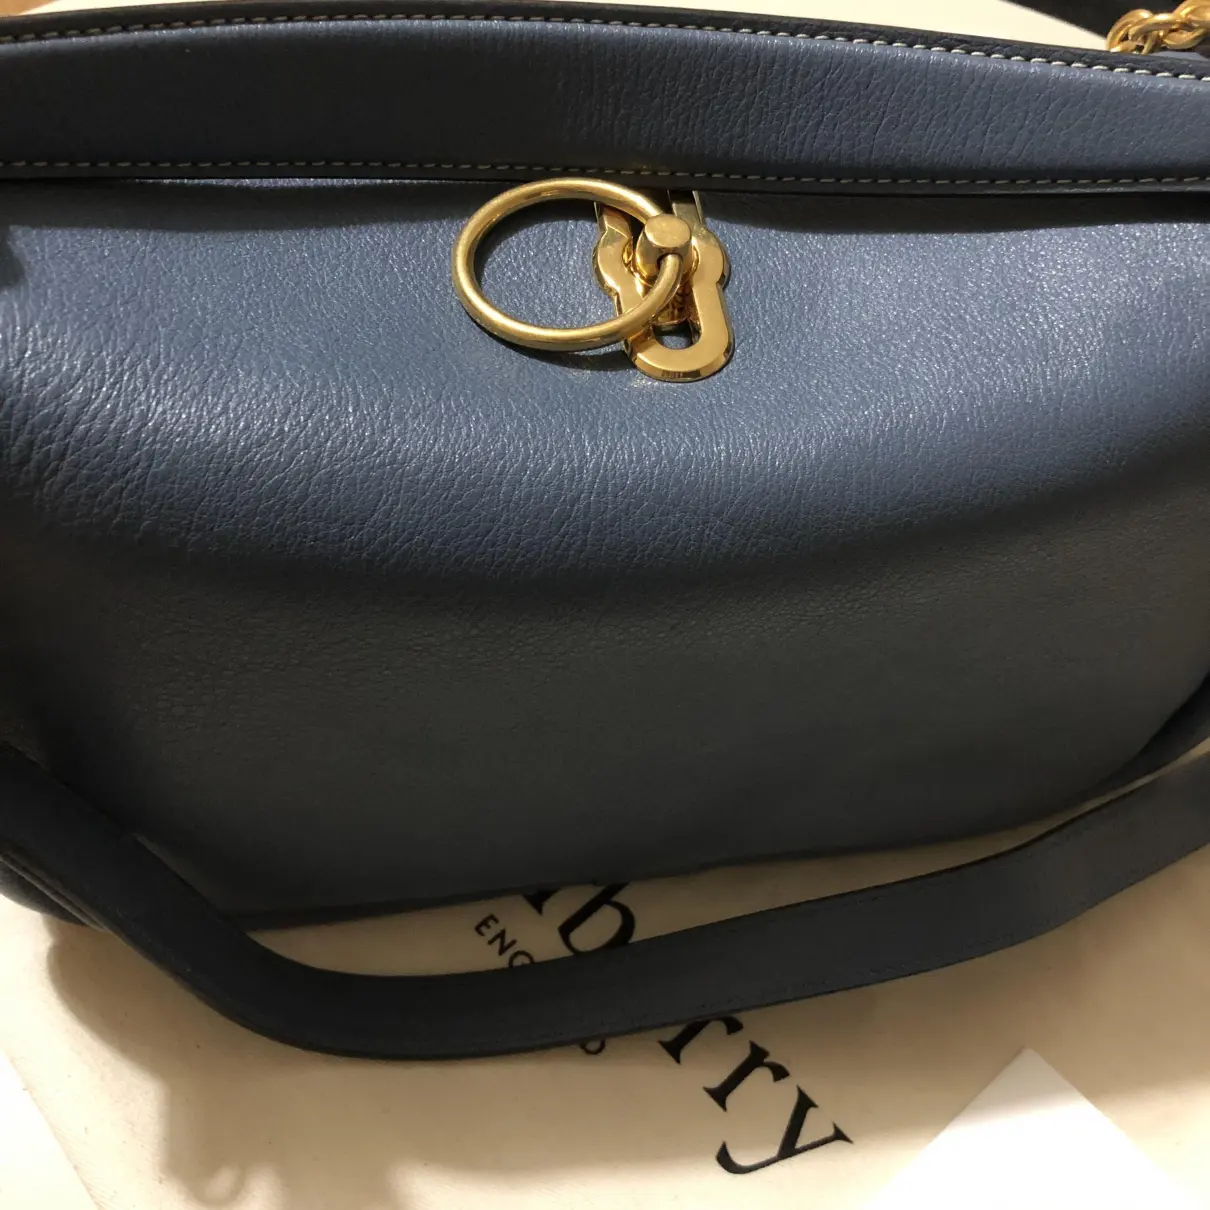 Leighton leather handbag Mulberry